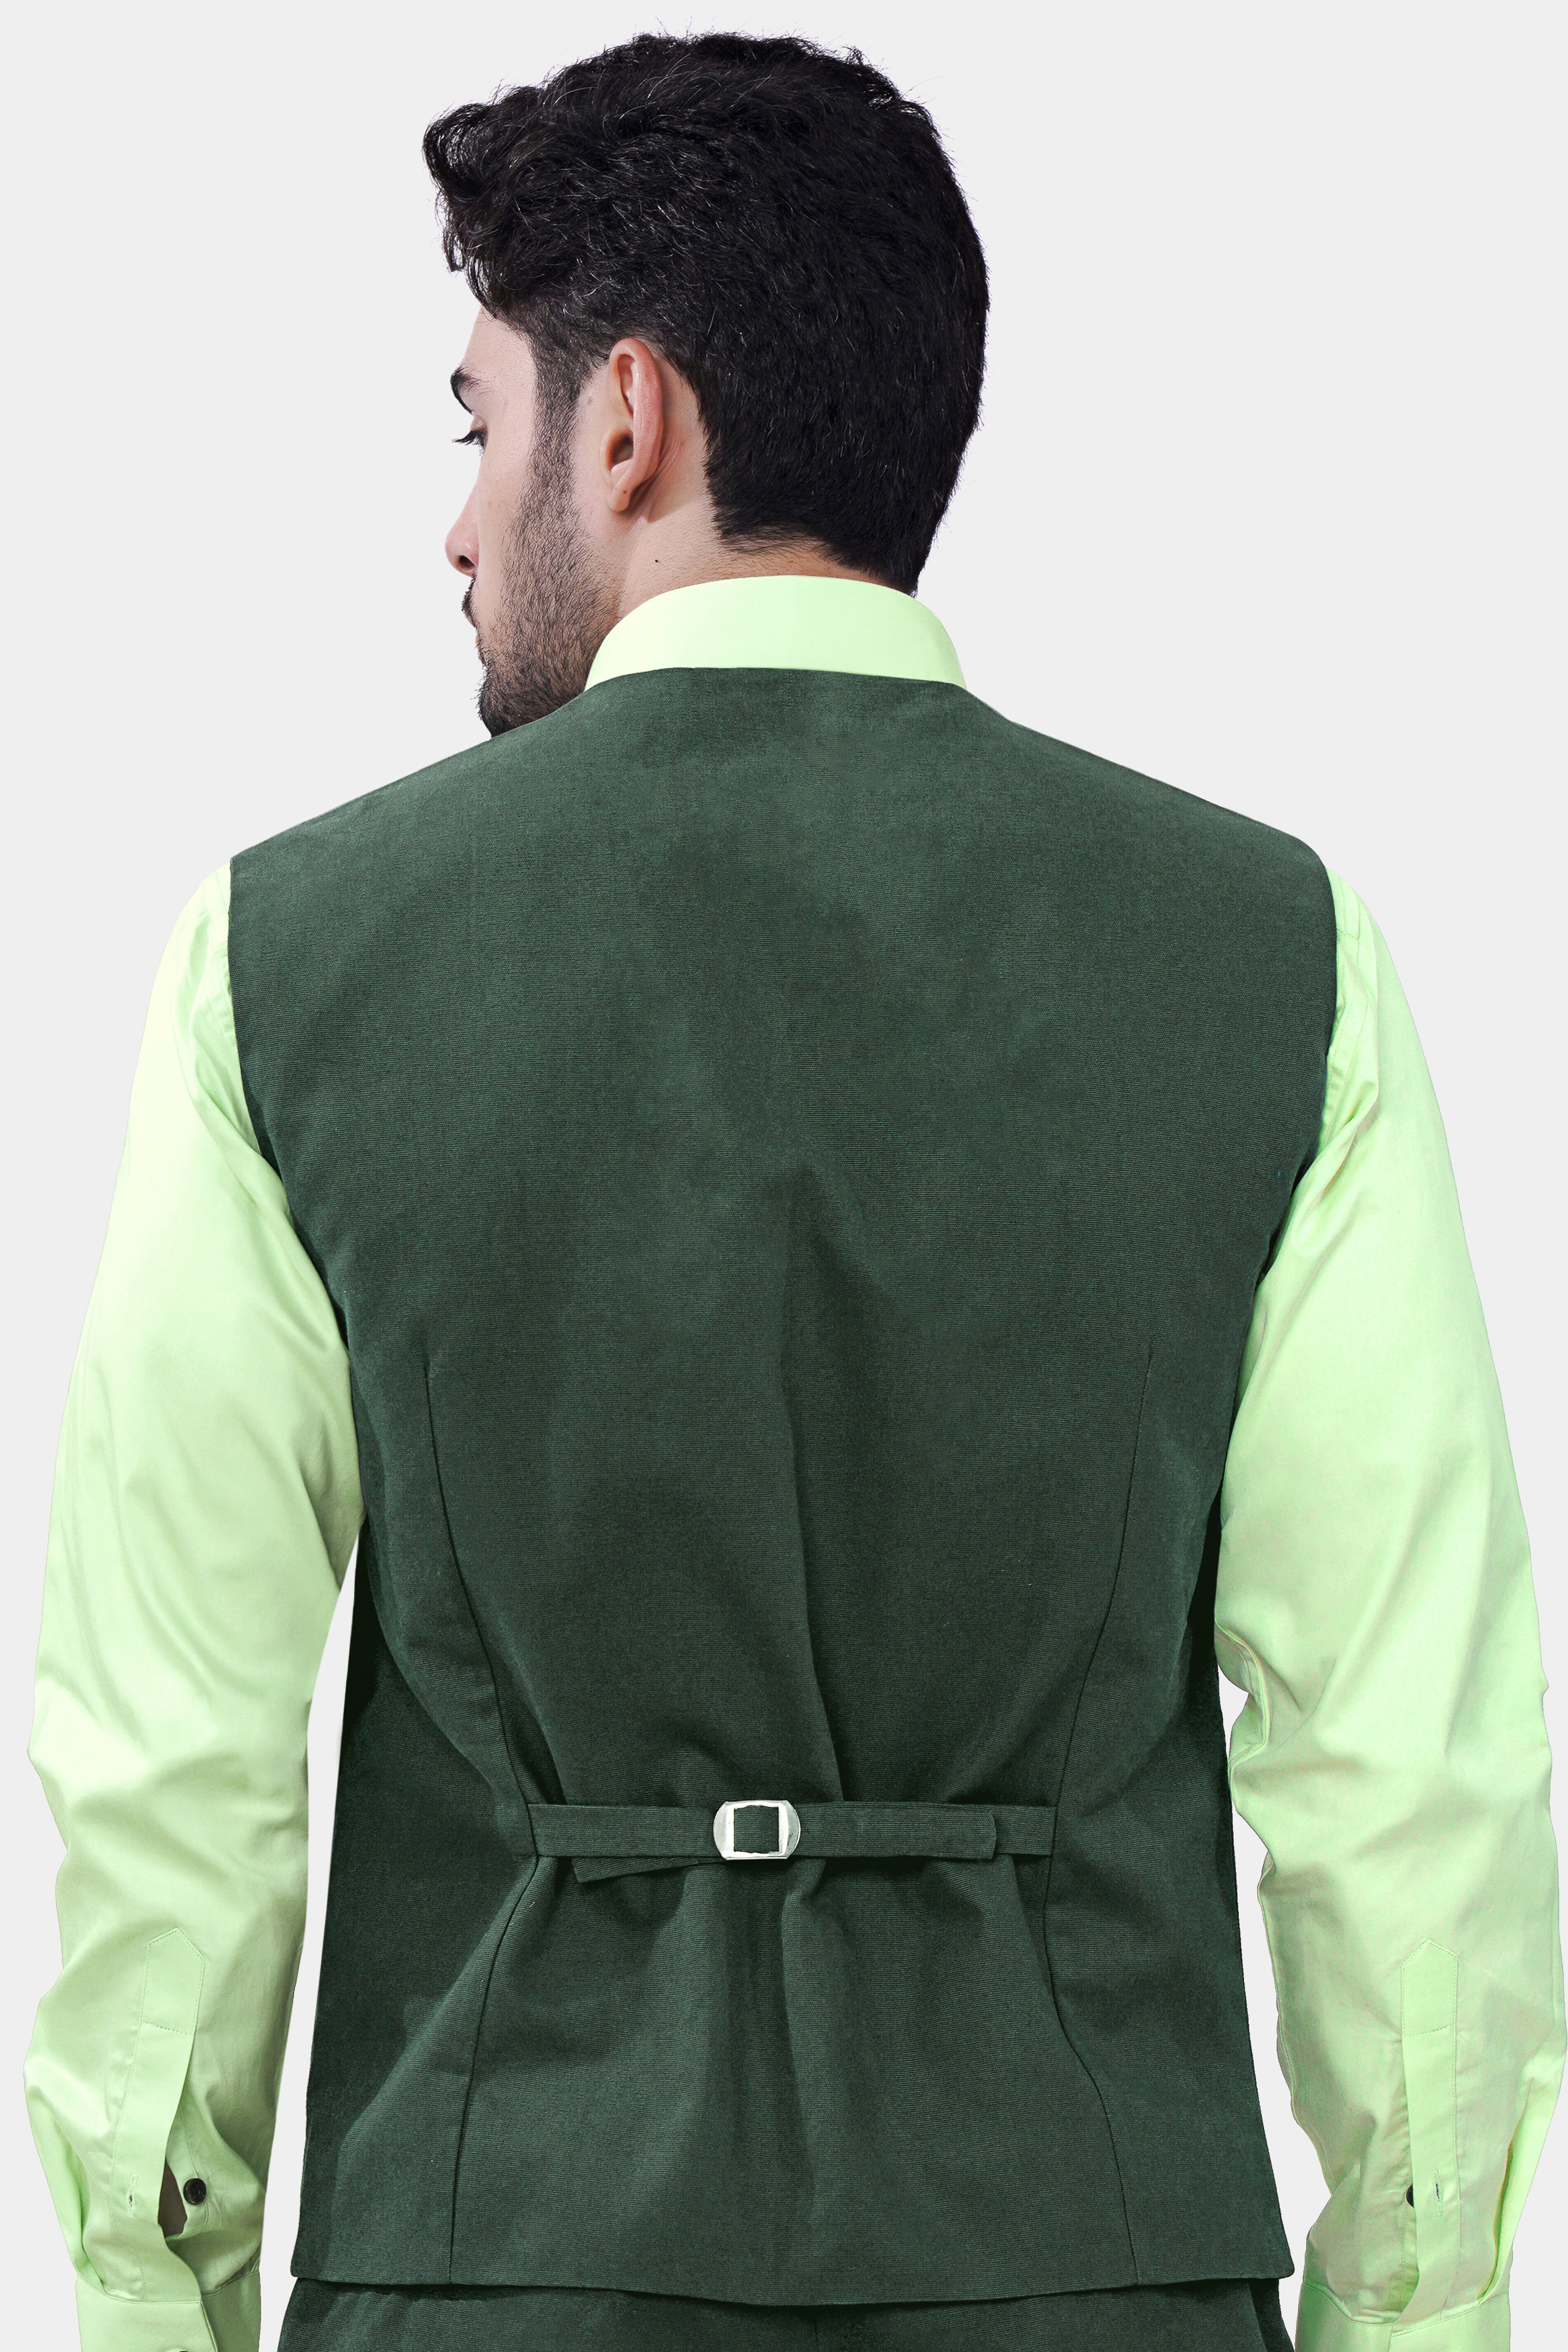 Fern Green Premium Cotton Waistcoat V2970-36, V2970-38, V2970-40, V2970-42, V2970-44, V2970-46, V2970-48, V2970-50, V2970-70, V2970-54, V2970-56, V2970-58, V2970-60